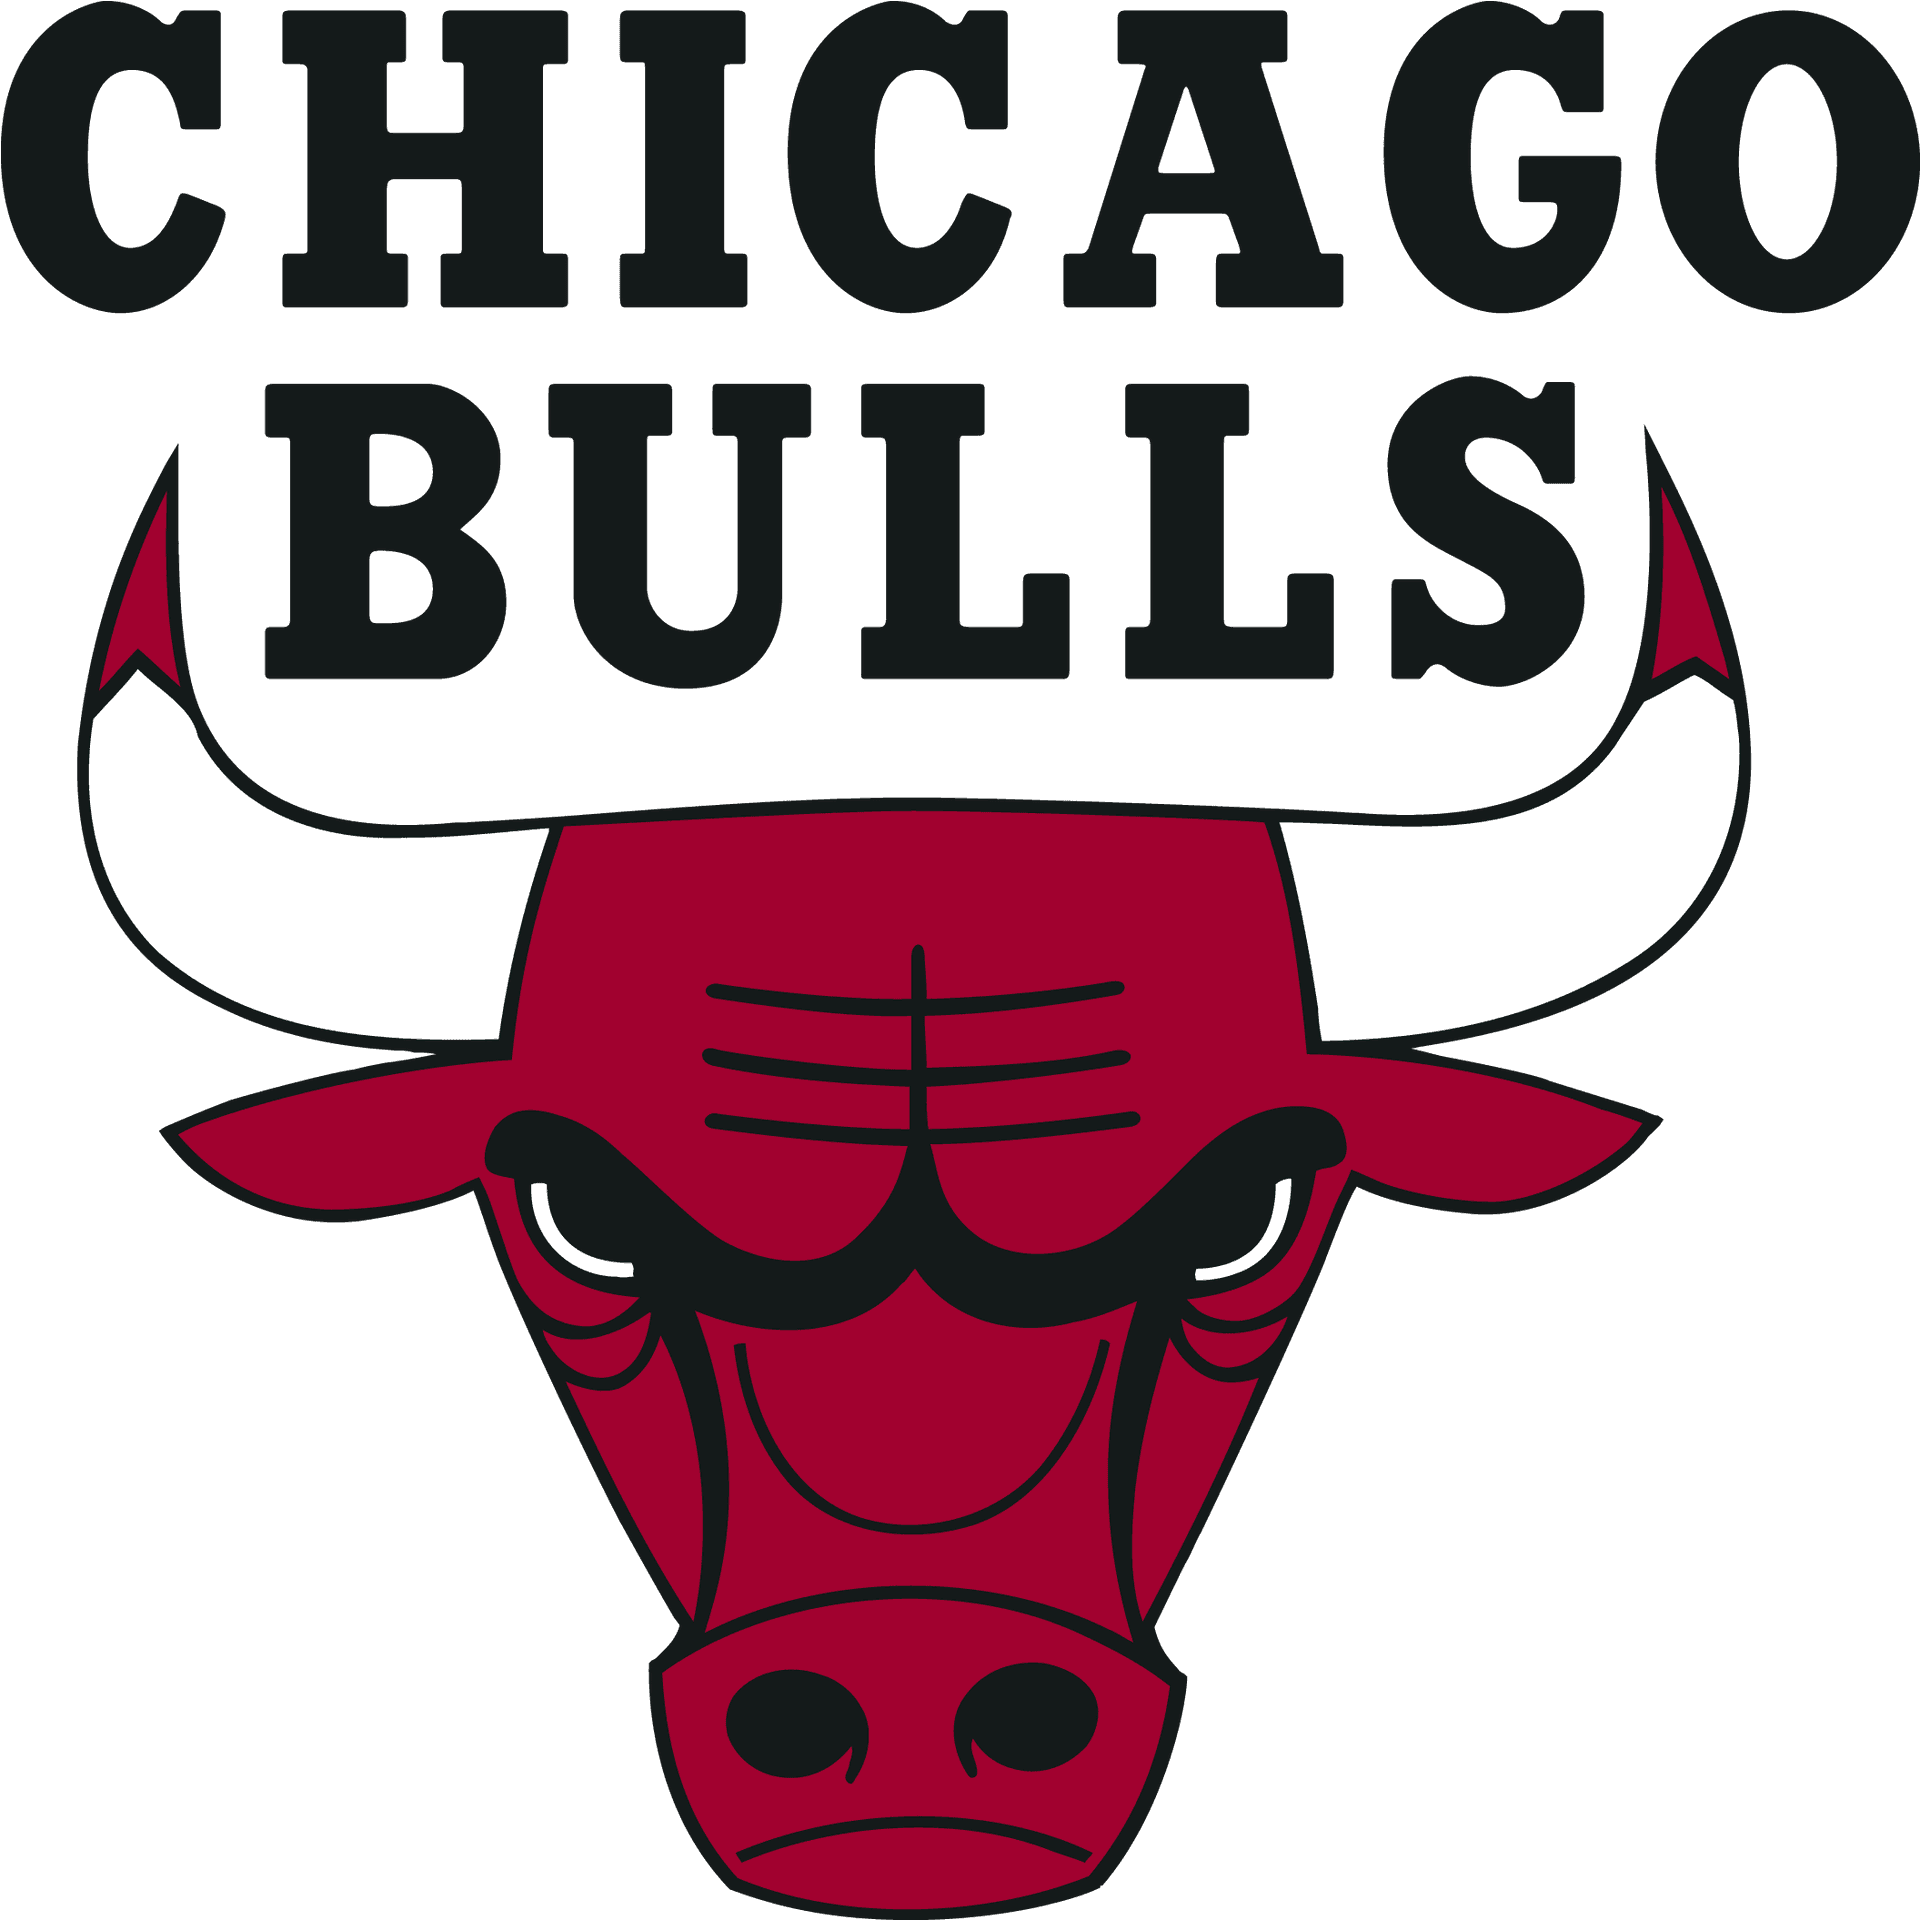 Chicago Bulls Logo Graphic PNG image